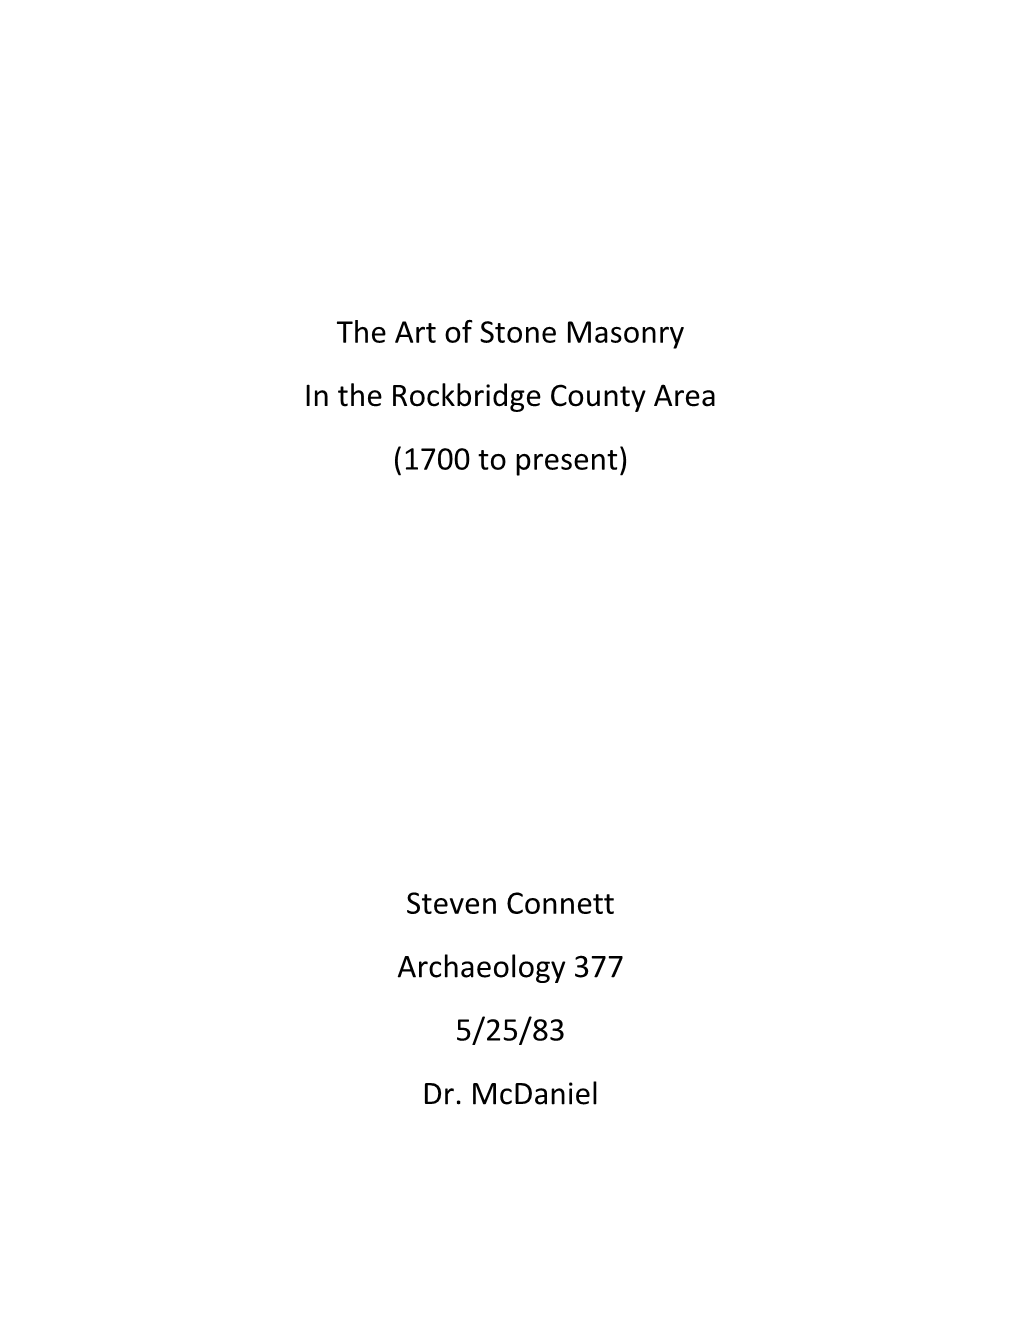 The Art of Stone Masonry in the Rockbridge County Area (1700 to Present)